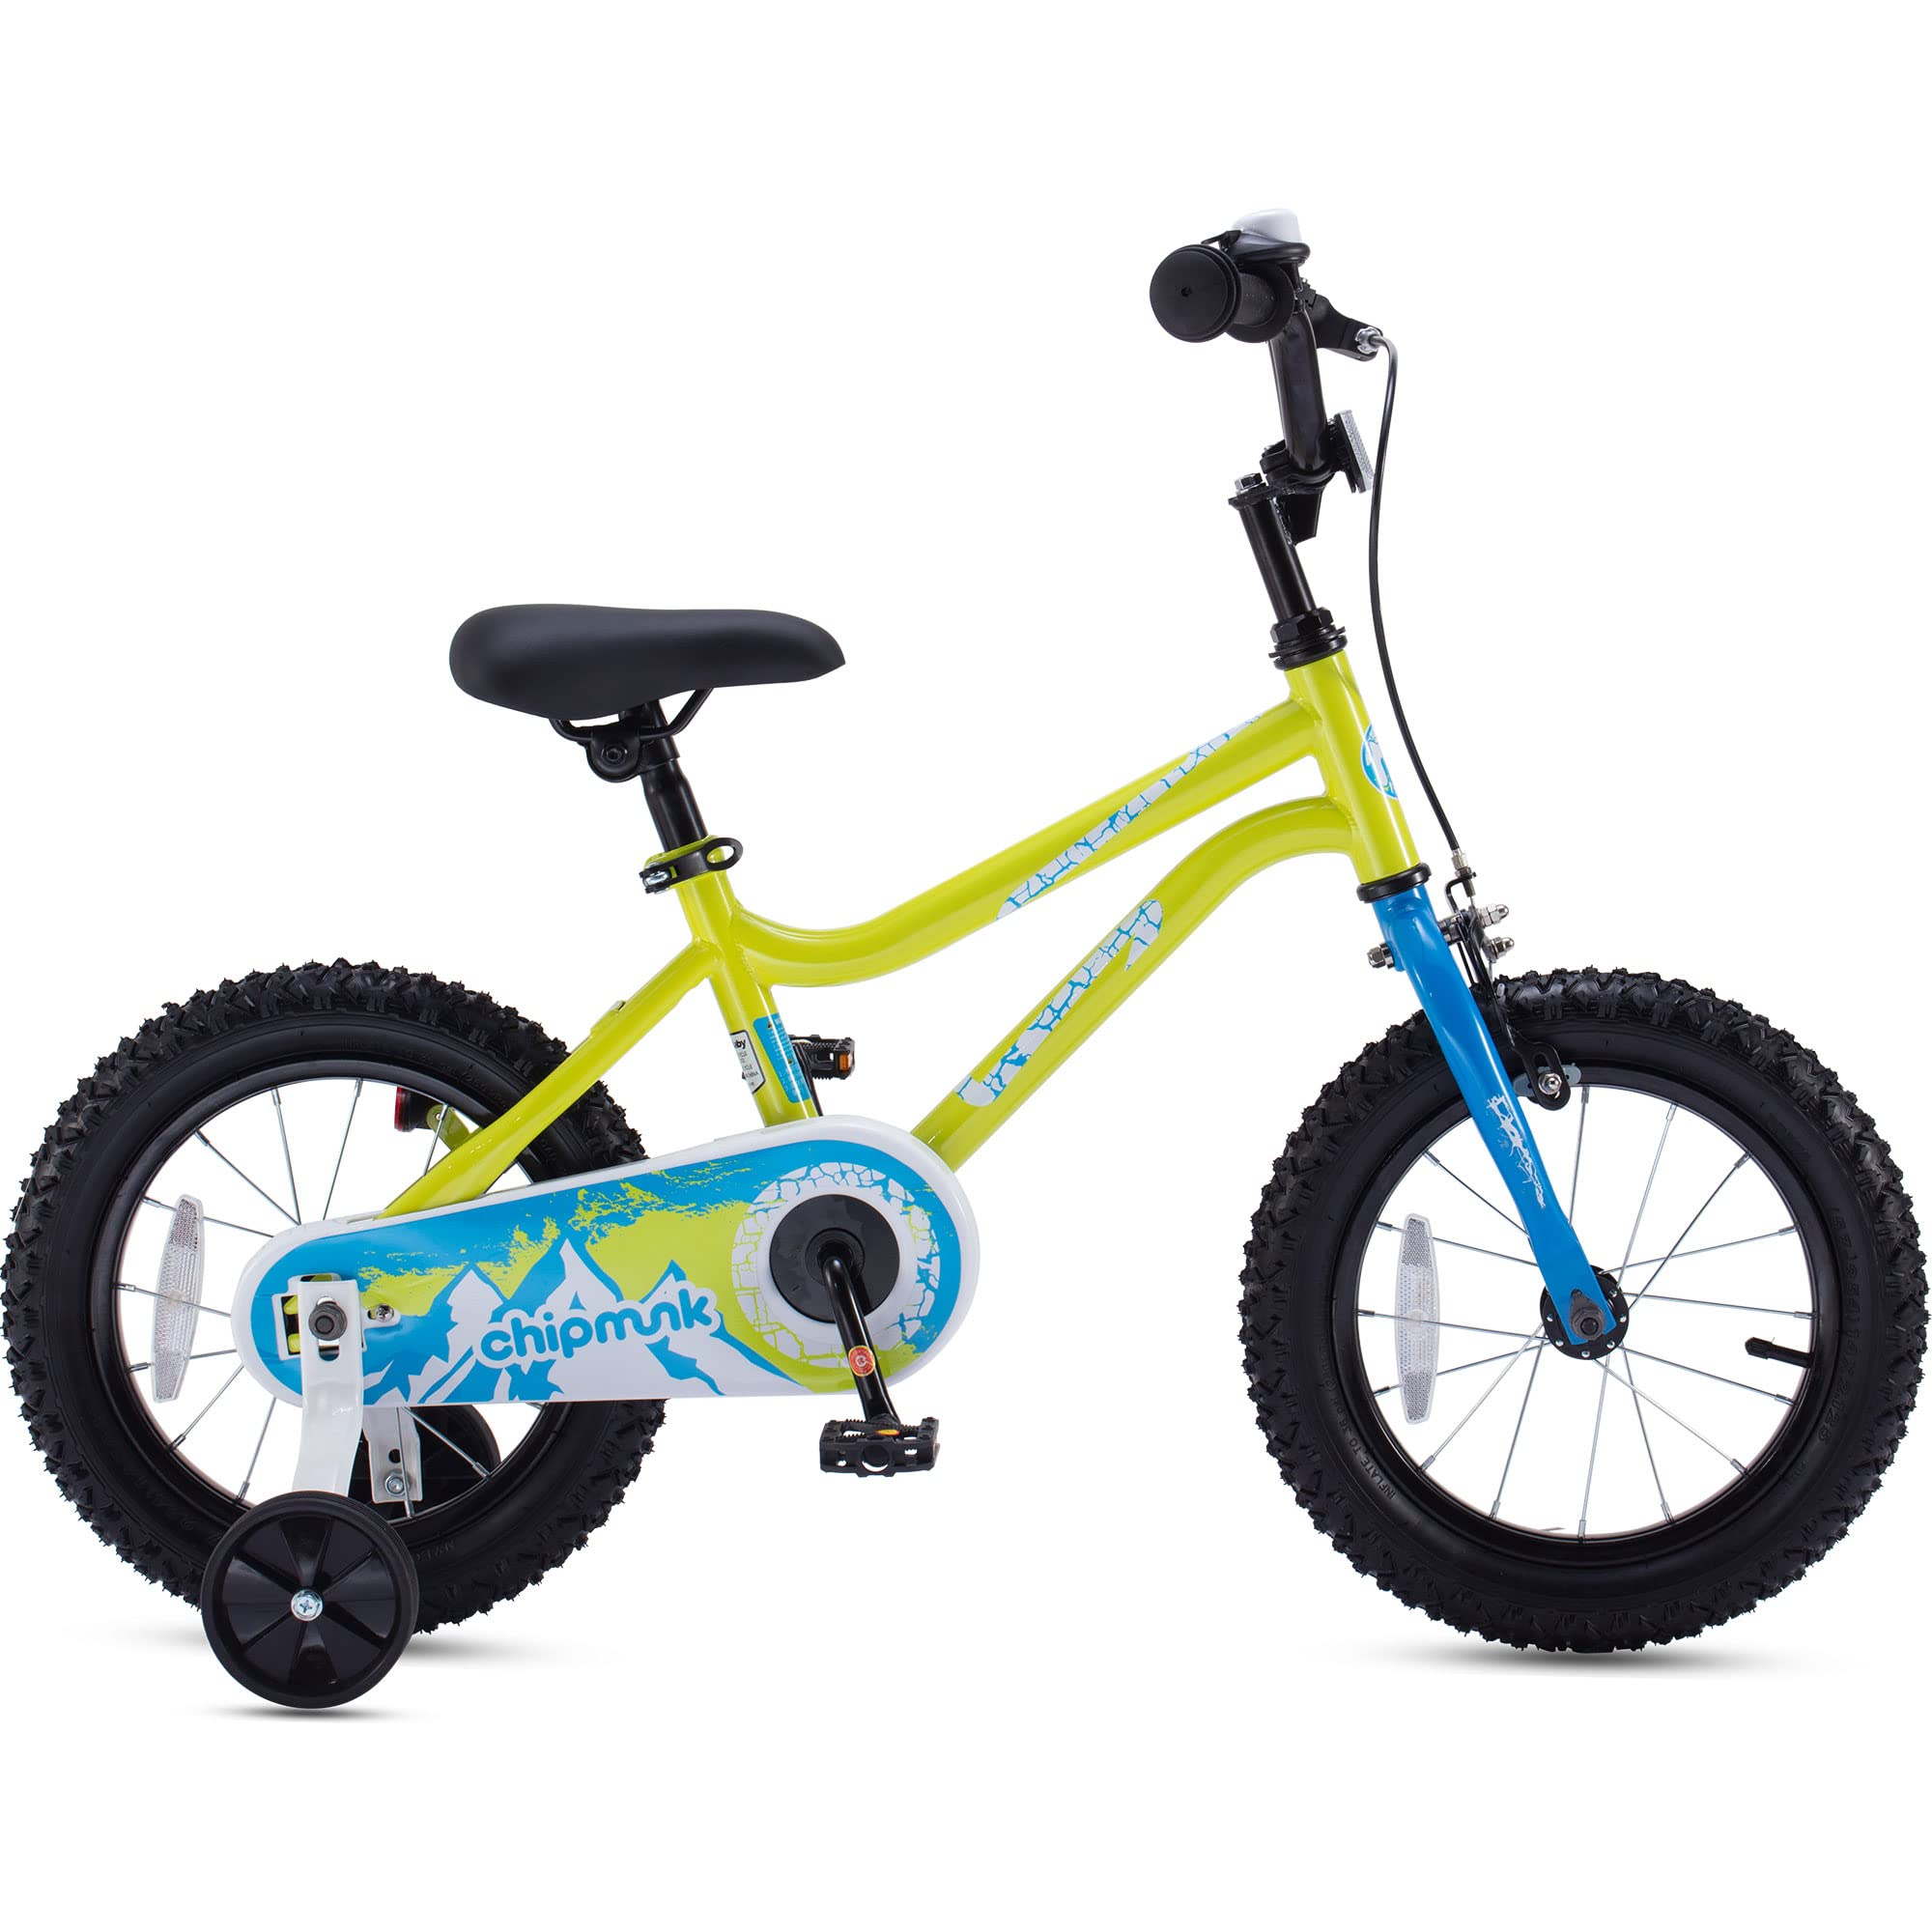 RoyalBaby Chipmunk Kids Bike Boys Girls 16 Inch bike with Training Wheels and Kickstand Green